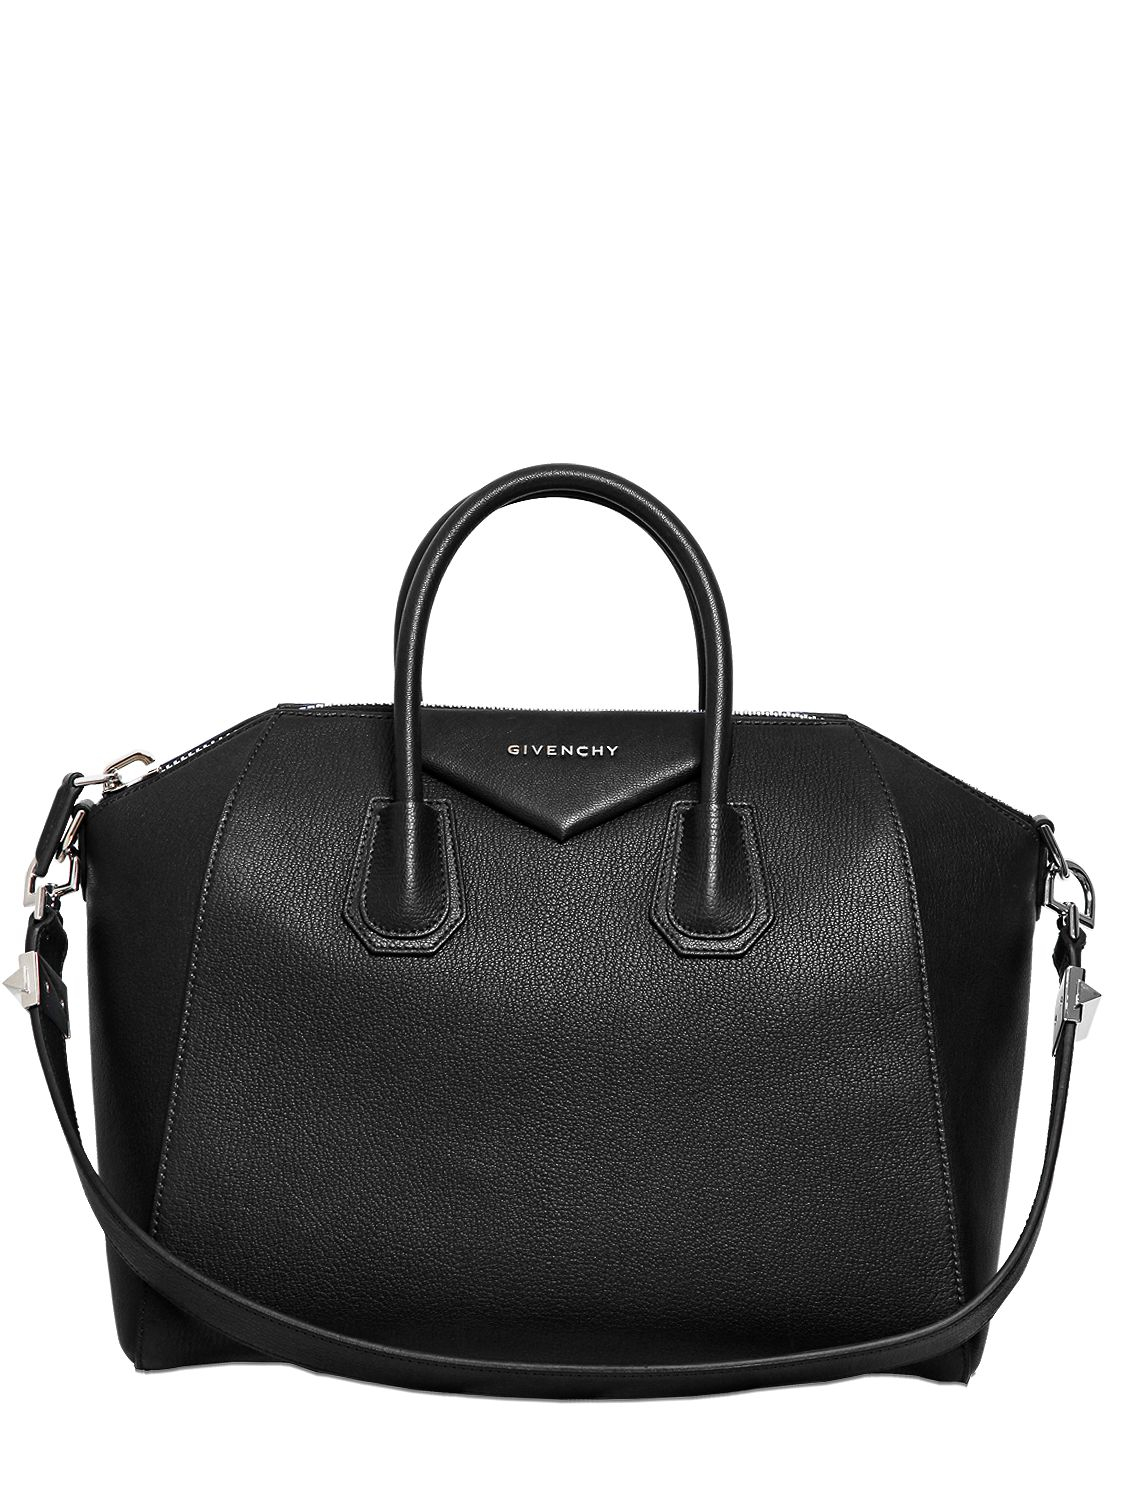 Givenchy Medium Antigona Grained Leather Bag in Black - Lyst